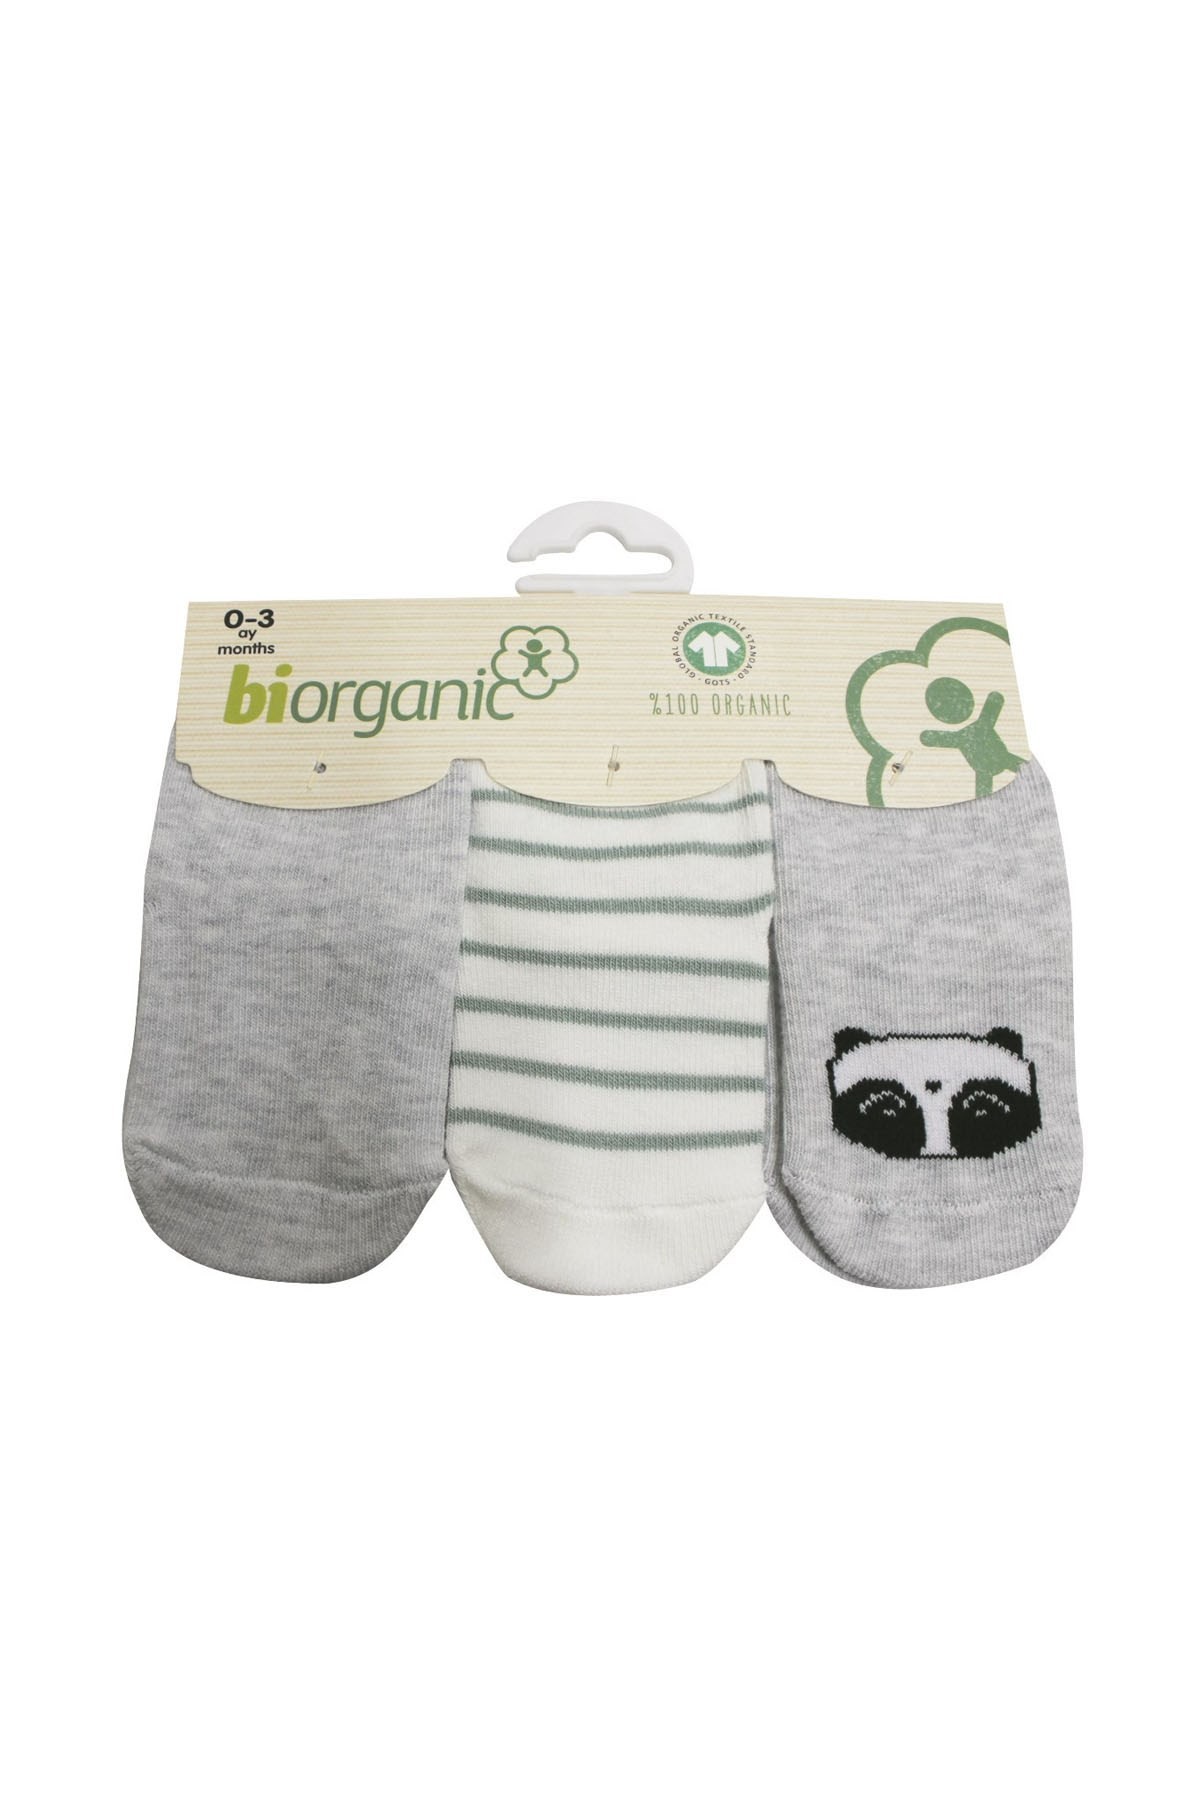 Biorganic Clever Boy 3lü Çorap Gri